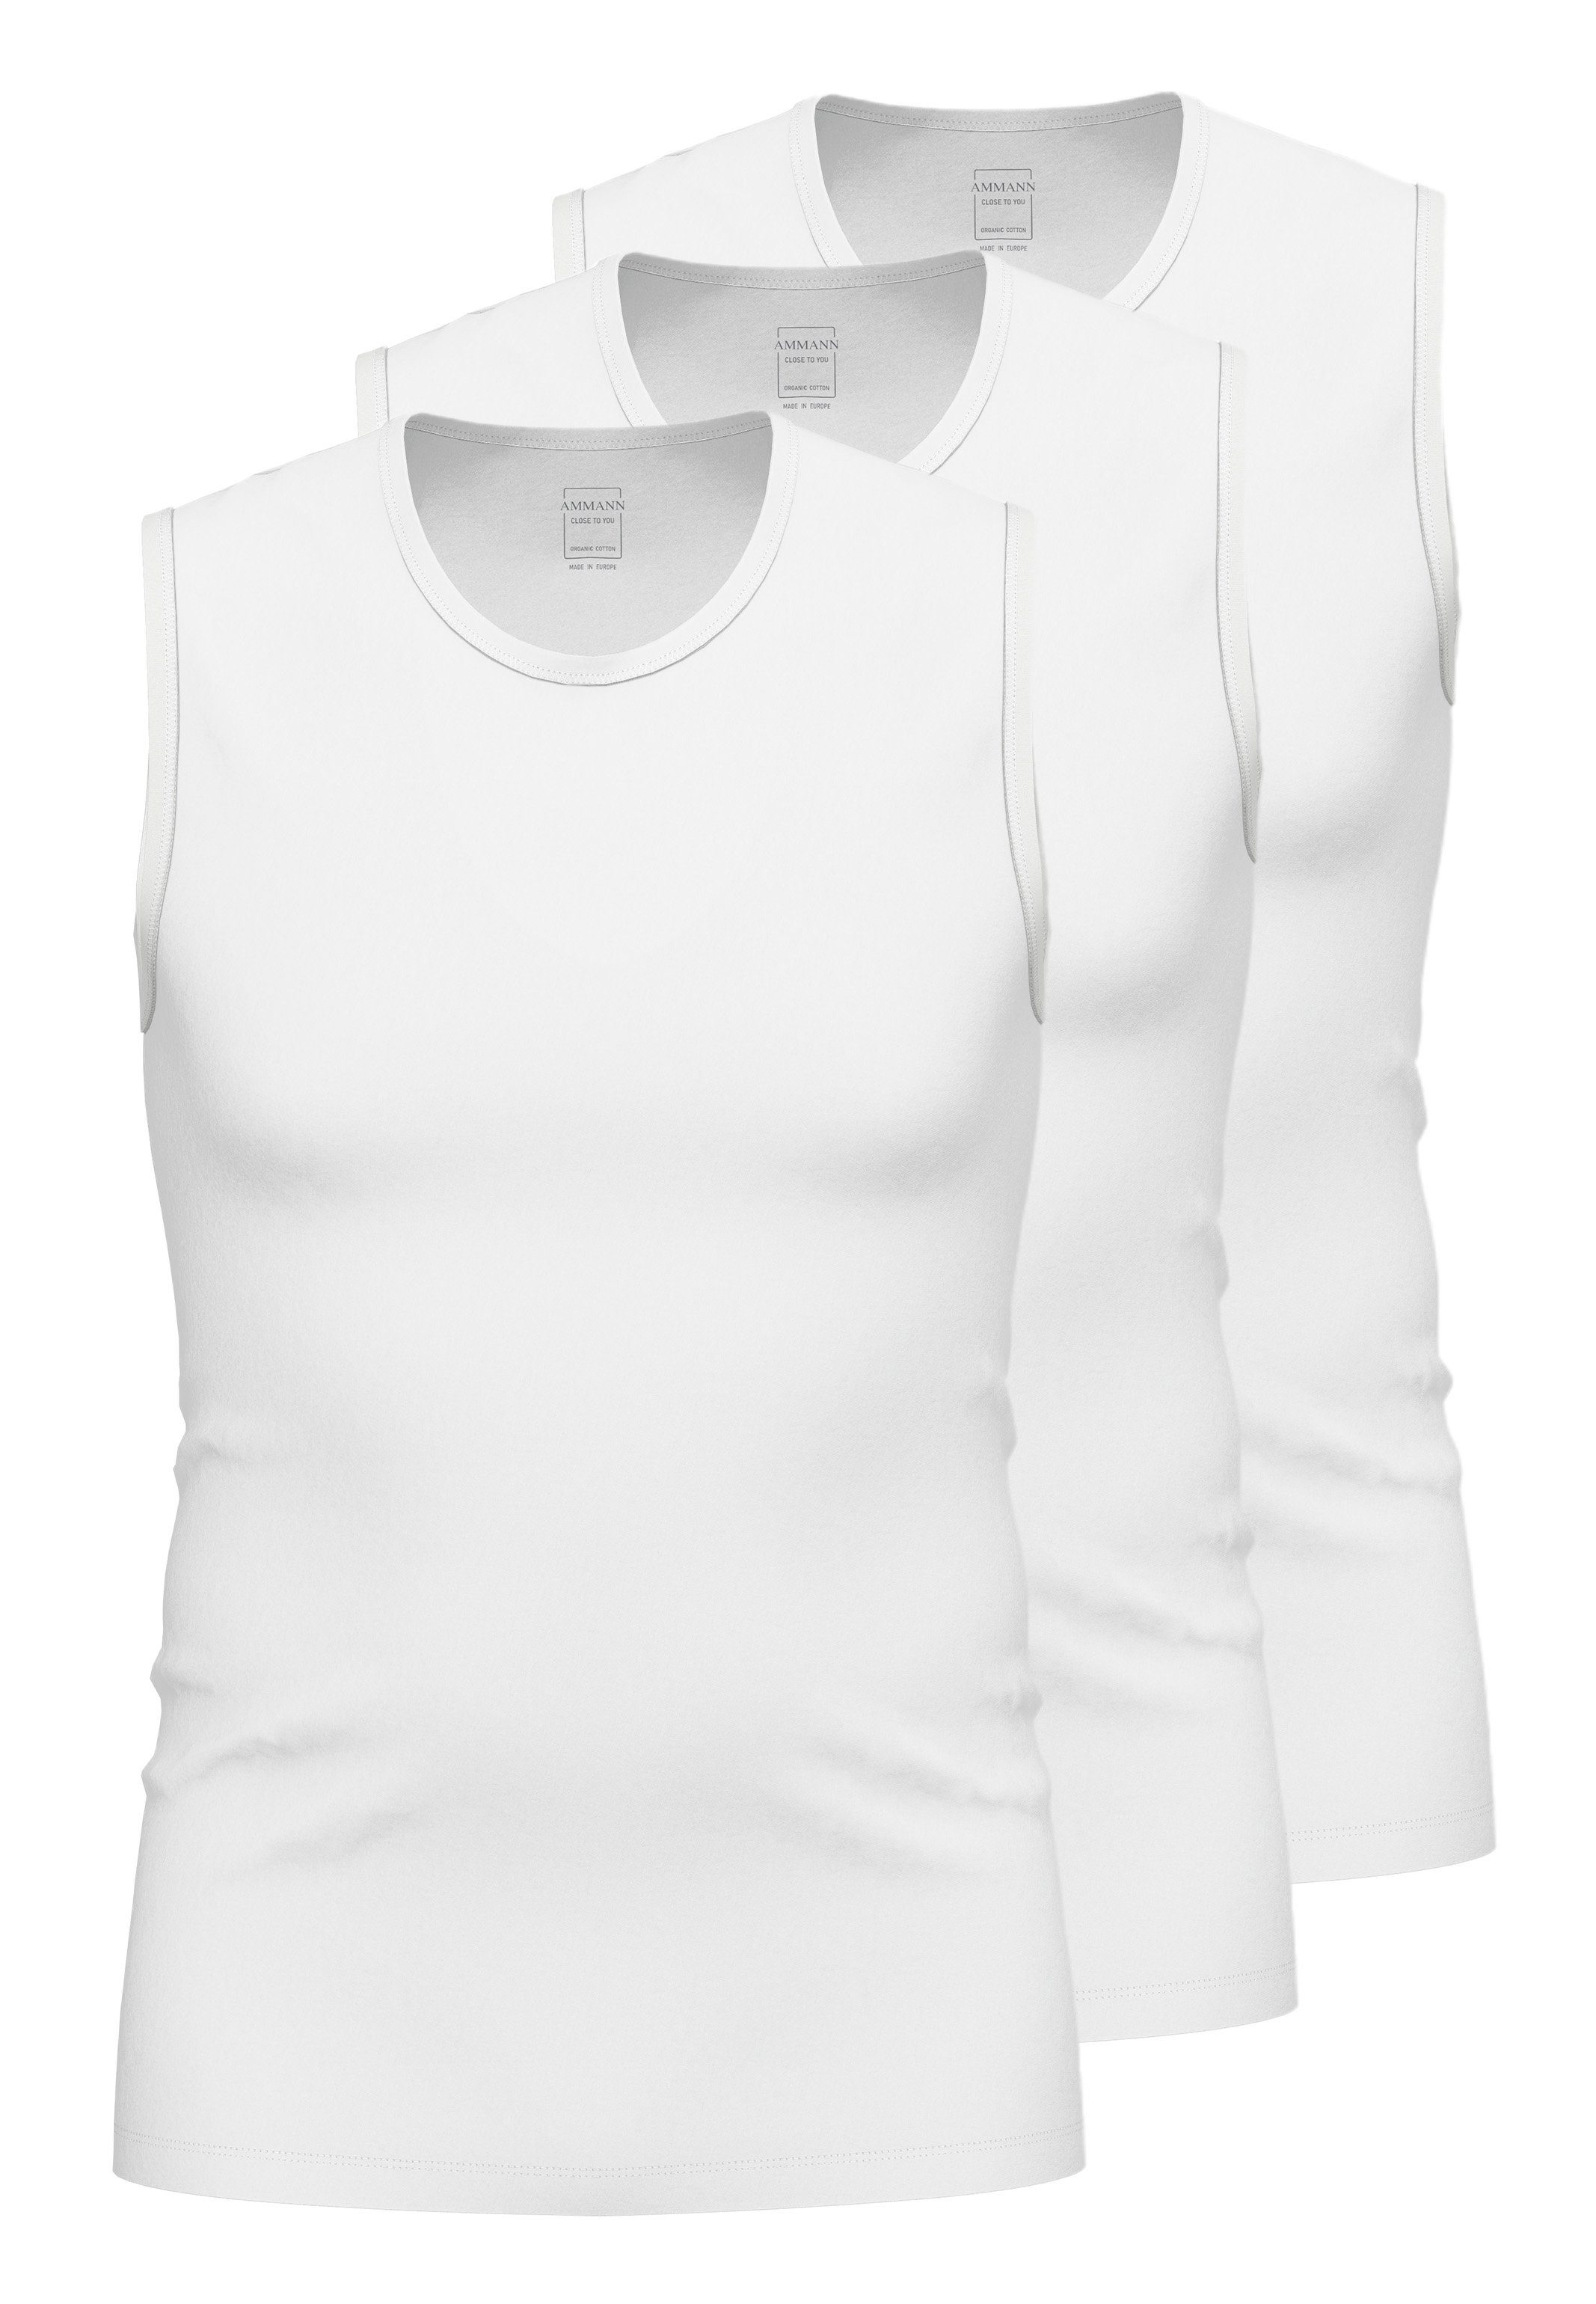 Ammann Unterhemd 3er Pack Close to you (Spar-Set, 3-St) Unterhemd / Tanktop - Baumwolle - Atmungsaktiv - Elastisches Material Weiß | Unterhemden